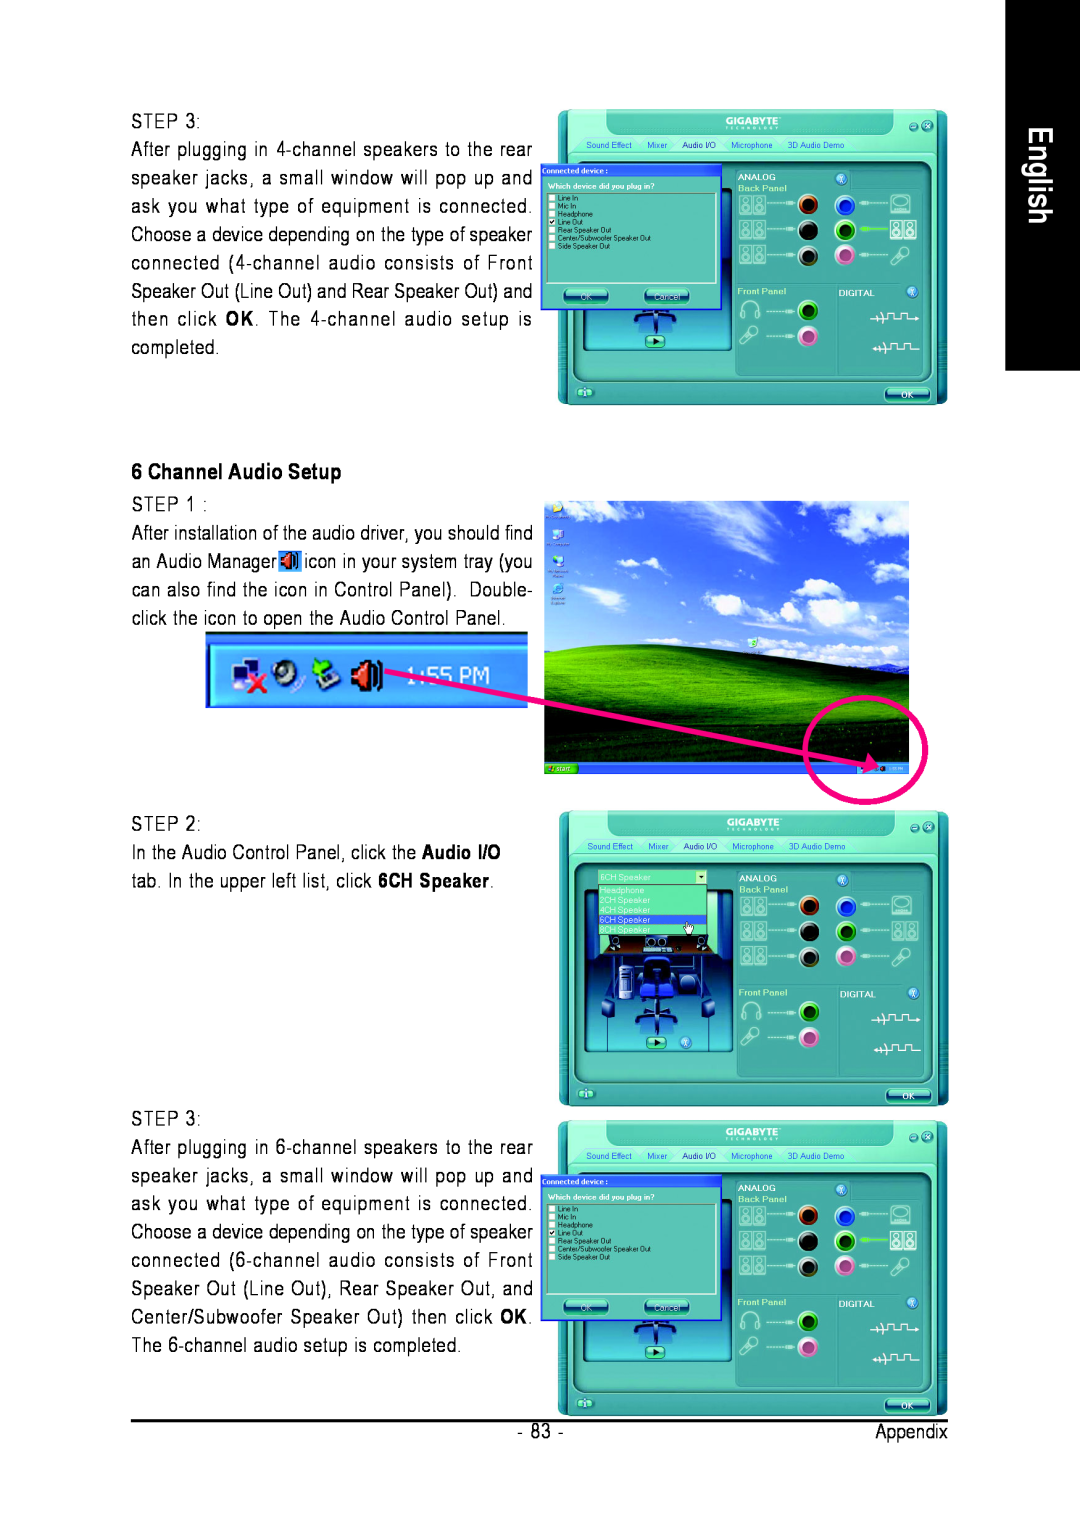 Intel GA-N650SLI-DS4 user manual English, Channel Audio Setup 